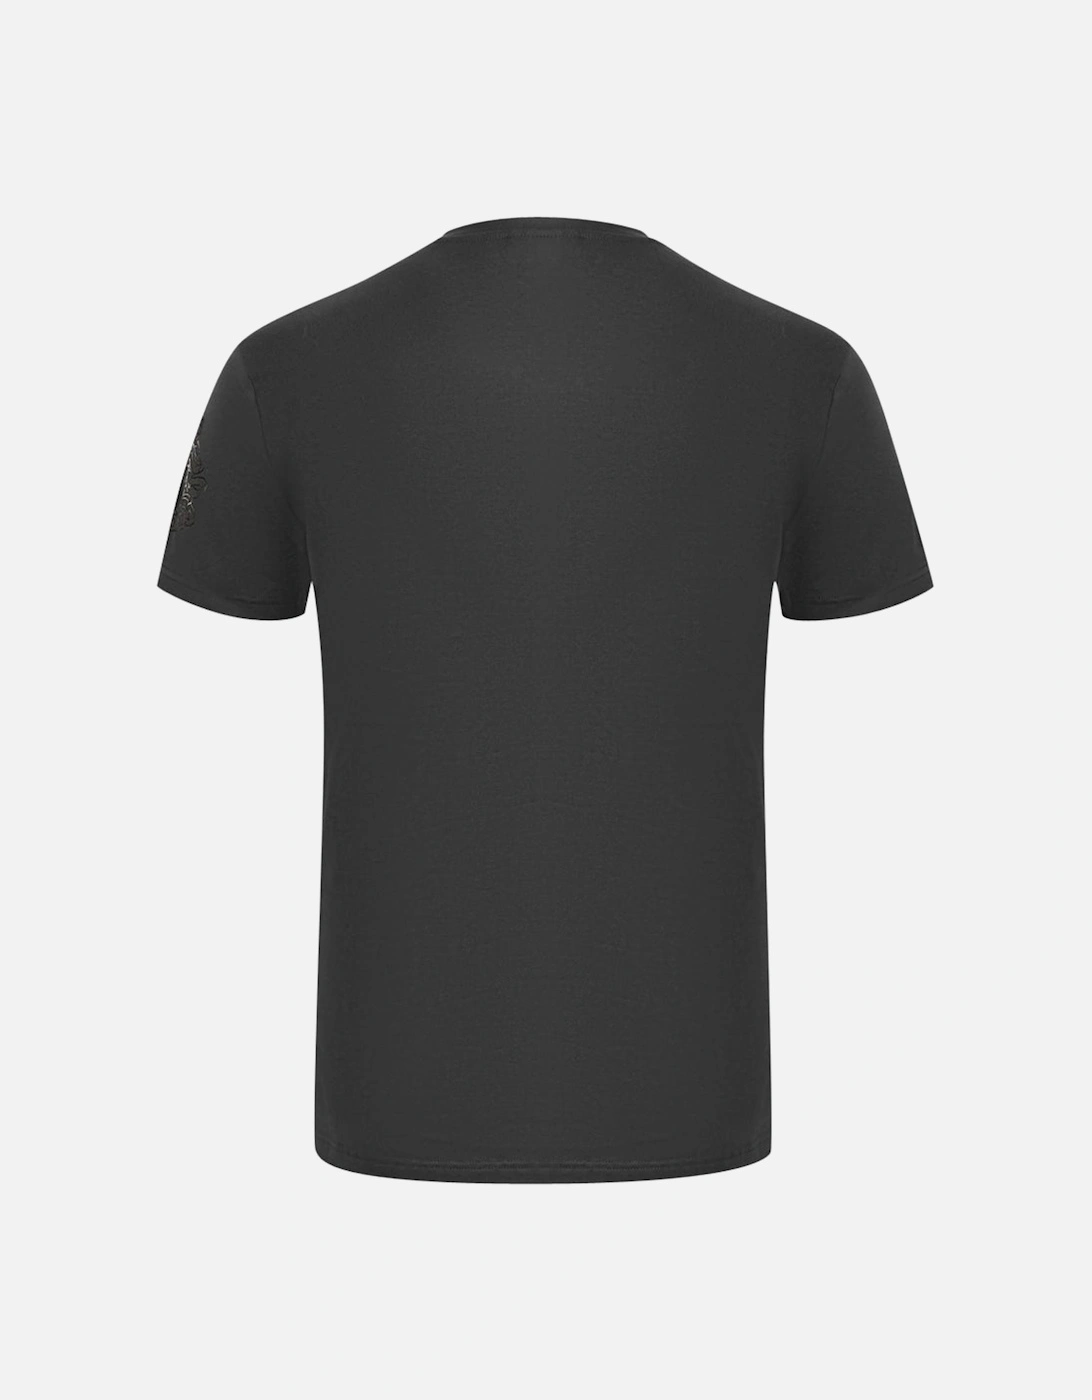 London Brand Logo Black T-Shirt